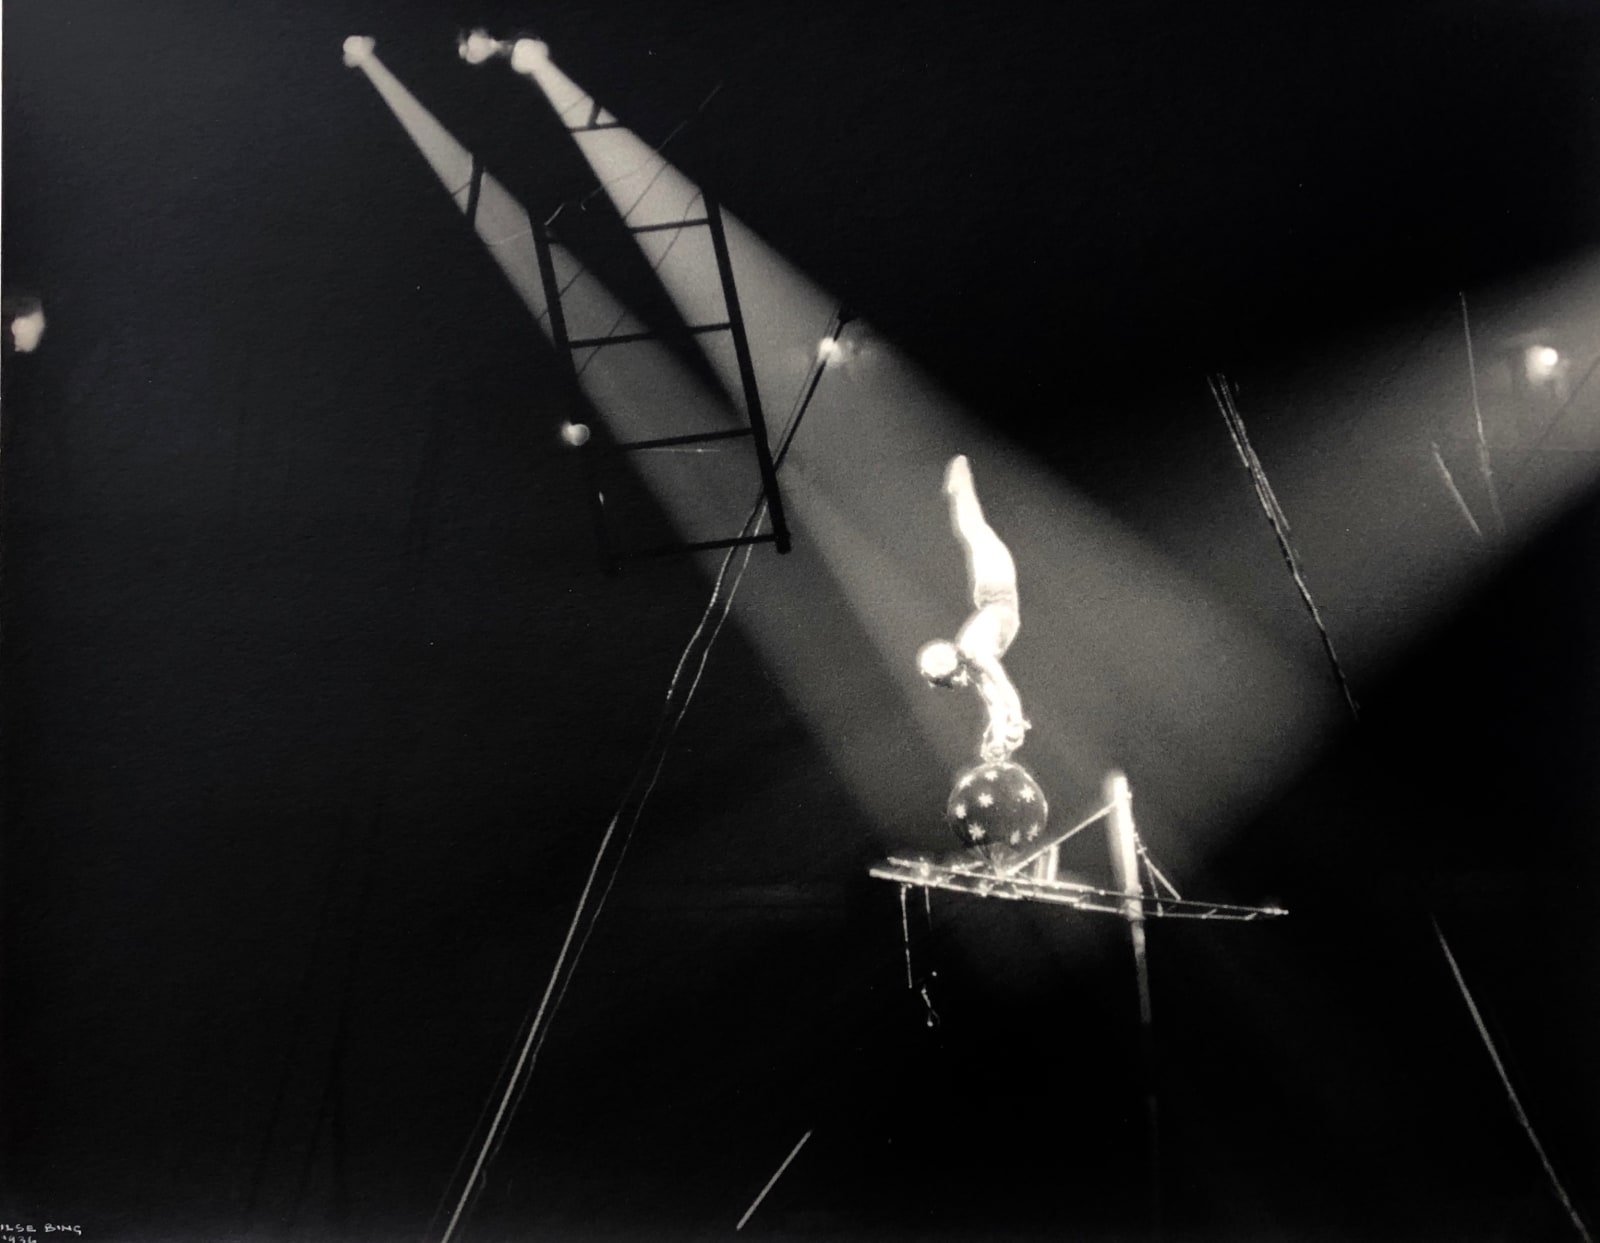 Ilse Bing, Circus Acrobat on Black Ball, New York, 1936-7